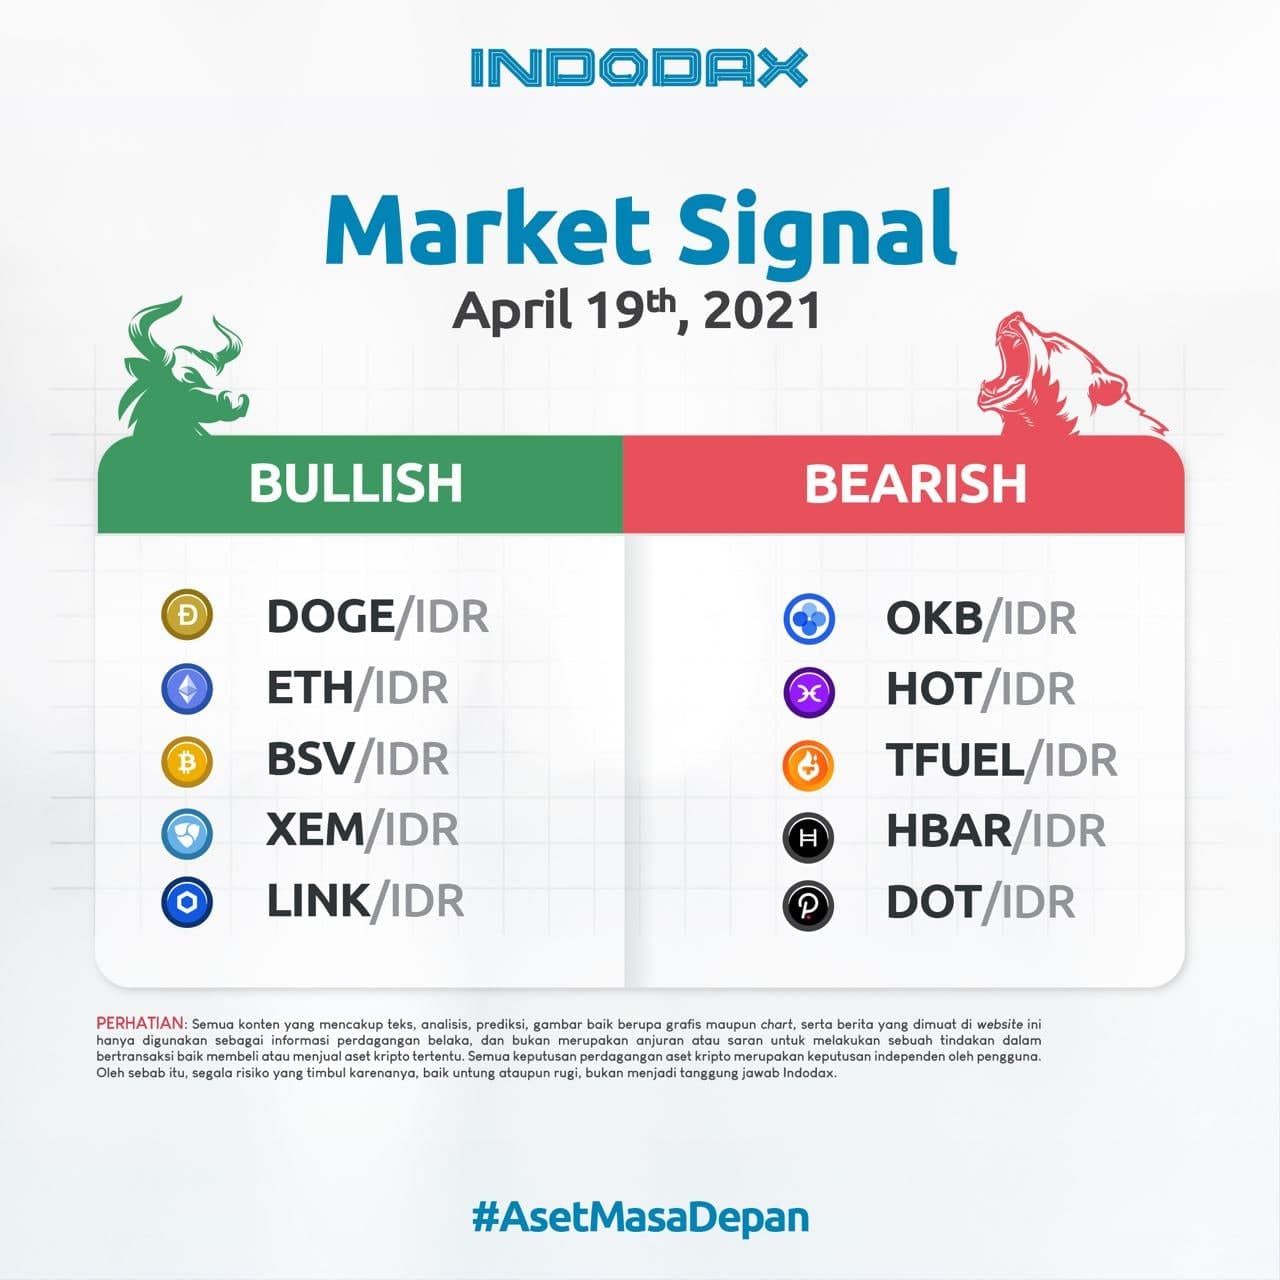 Indodax Market Signal April 19th, 2021: 5 Bullish and Bearish Crypto Assets This Week